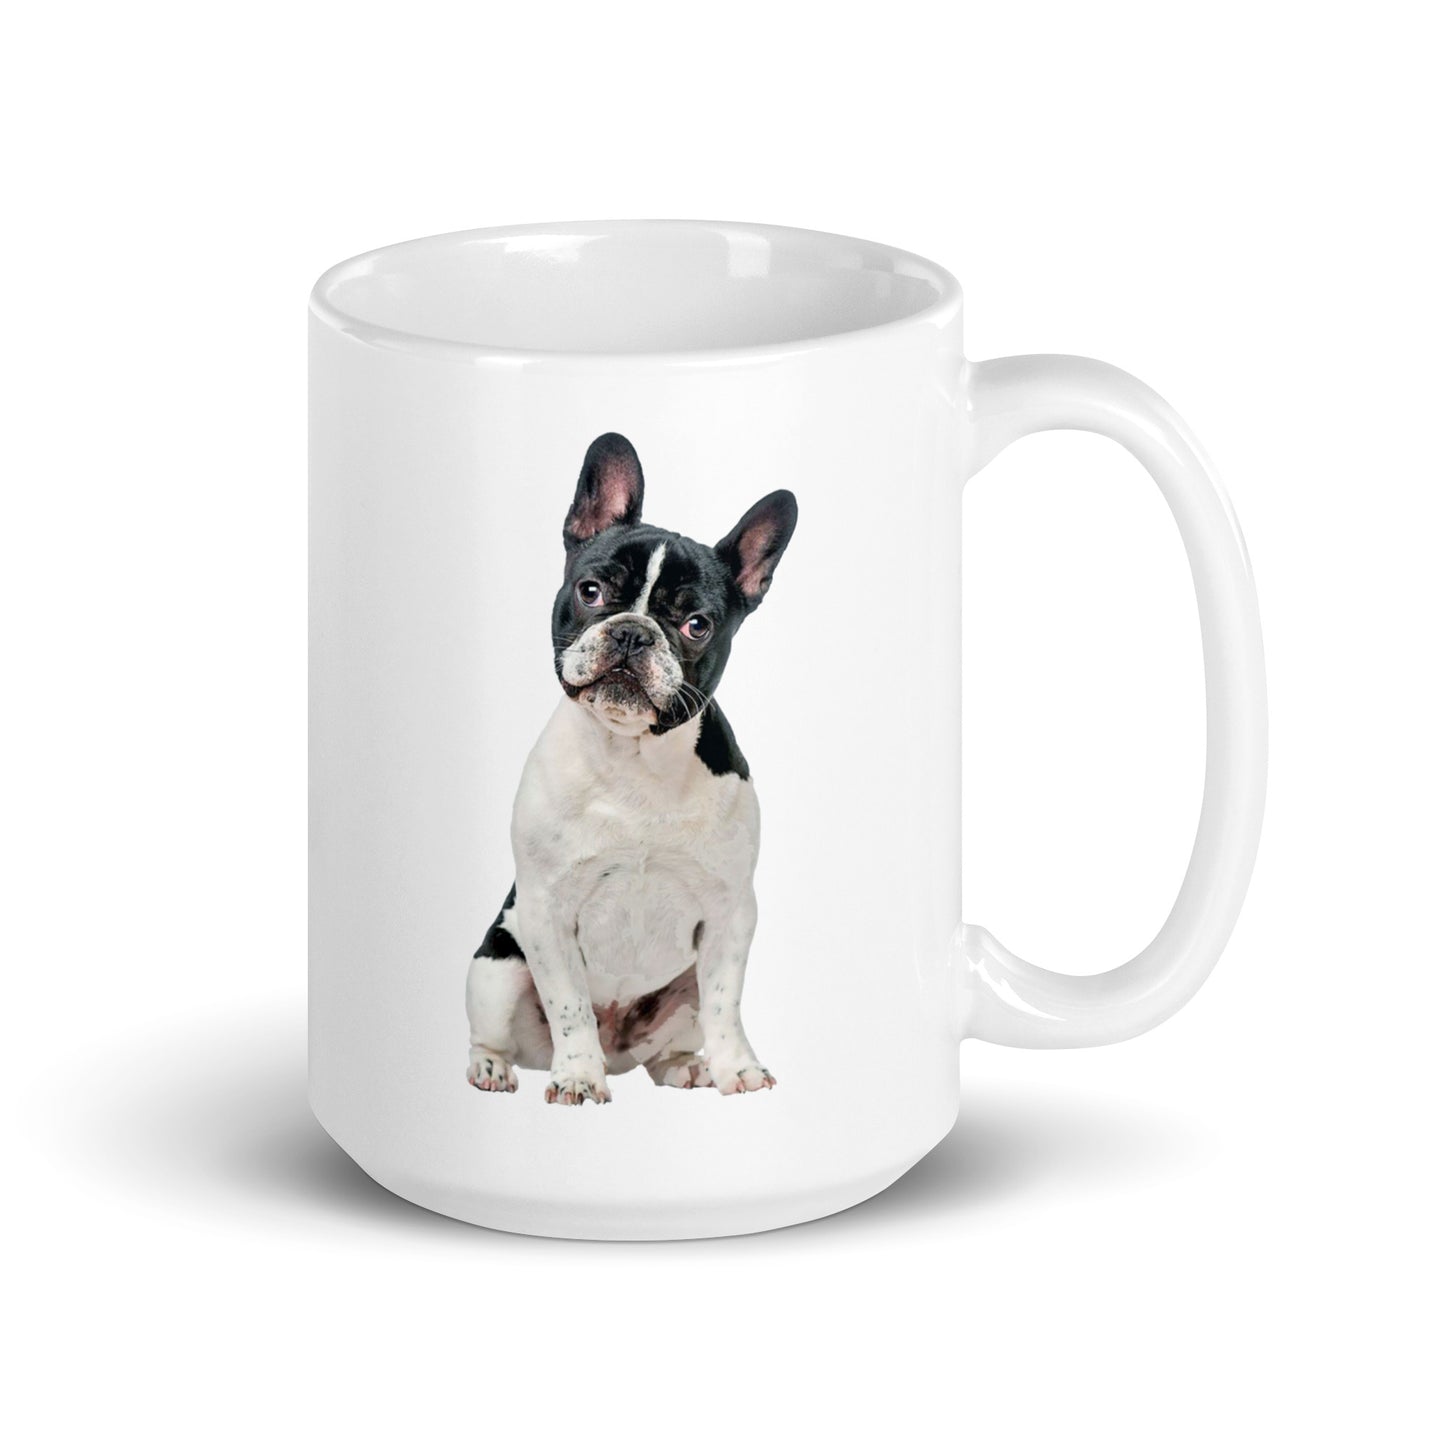 White glossy mug printed with a French bull dog